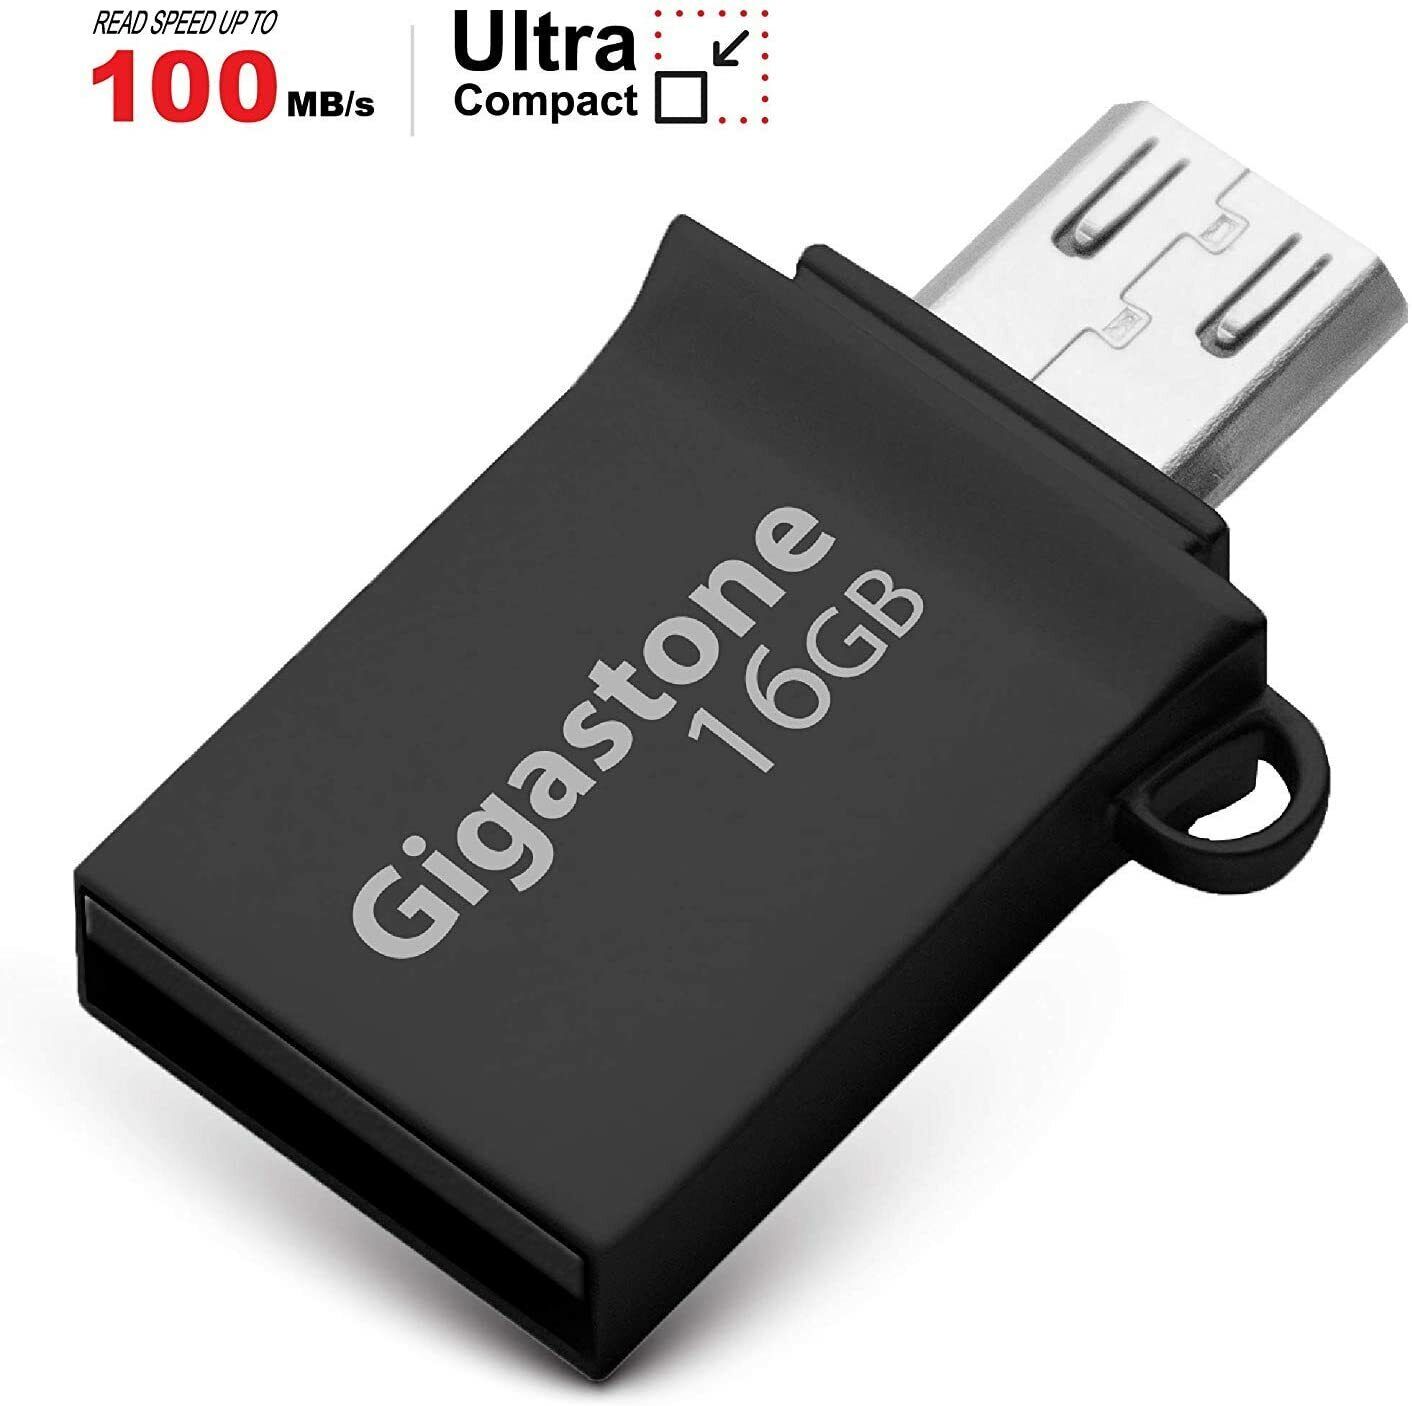 Gigastone 16GB USB 3.0 Flash Drive OTG with USB and Micro USB Dual Interfaces